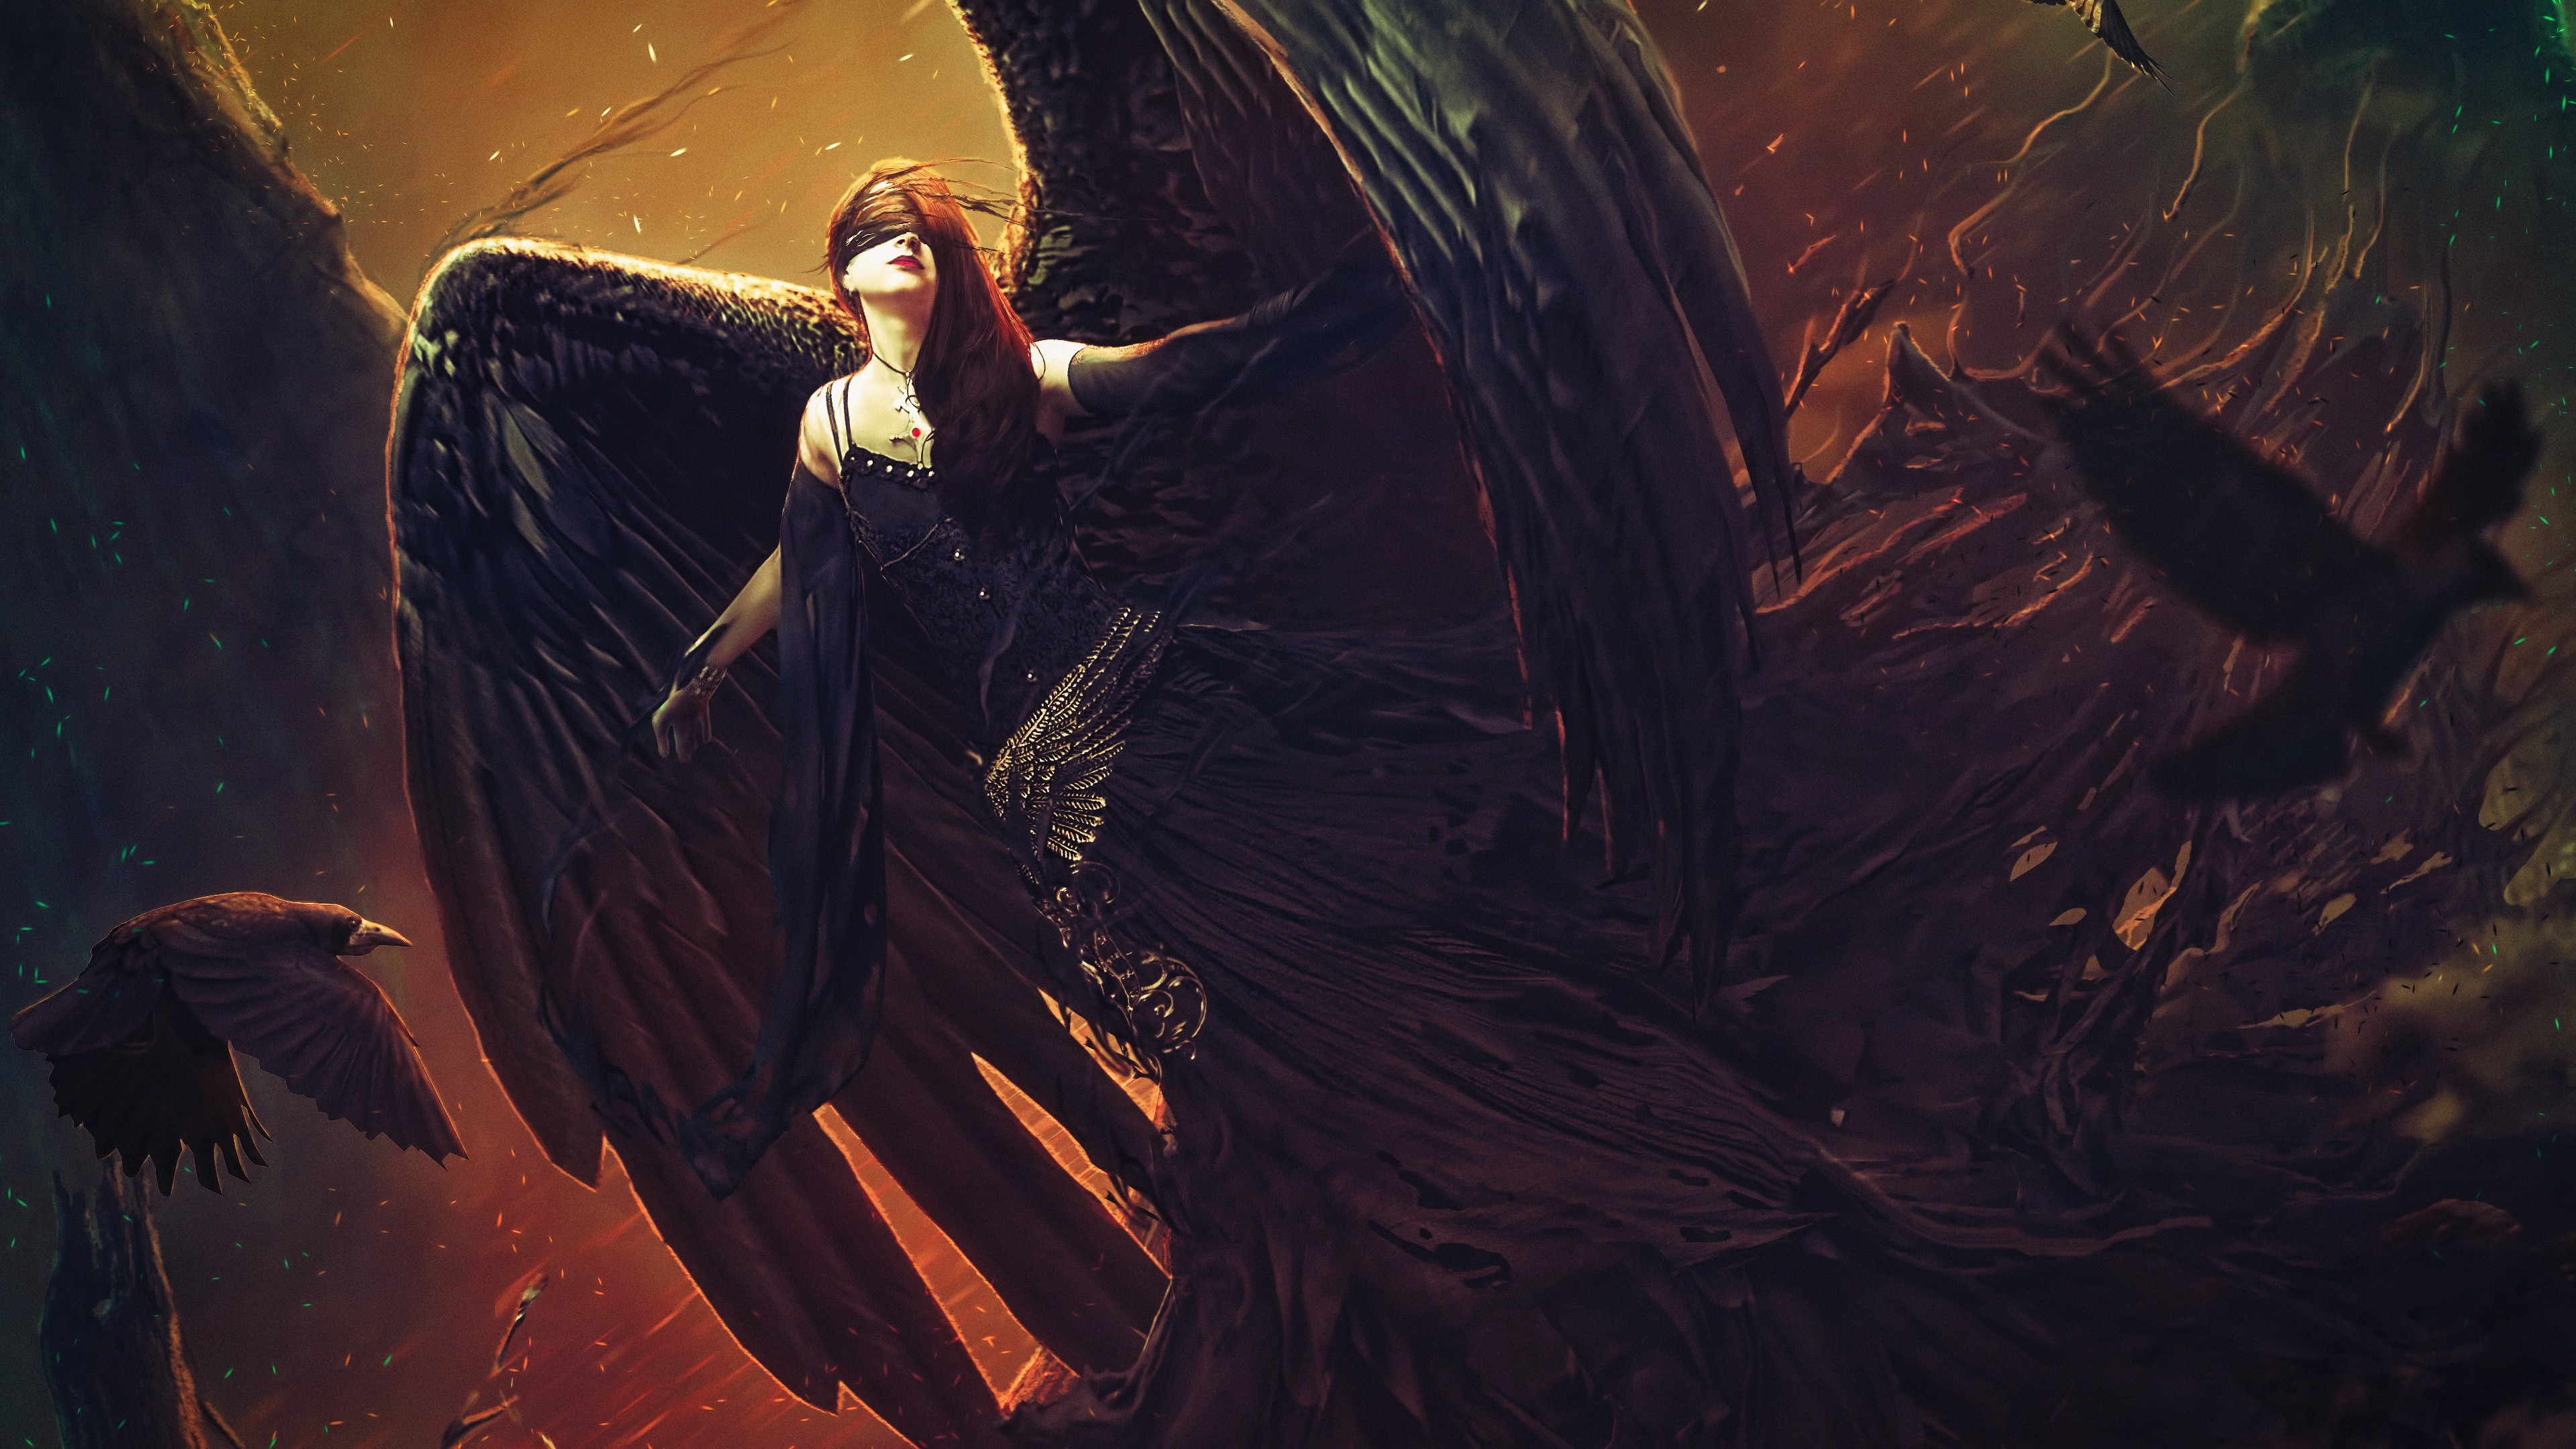 General 3840x2160 angel fantasy art artwork fan art science fiction concept art long hair shadow redhead raven black dress